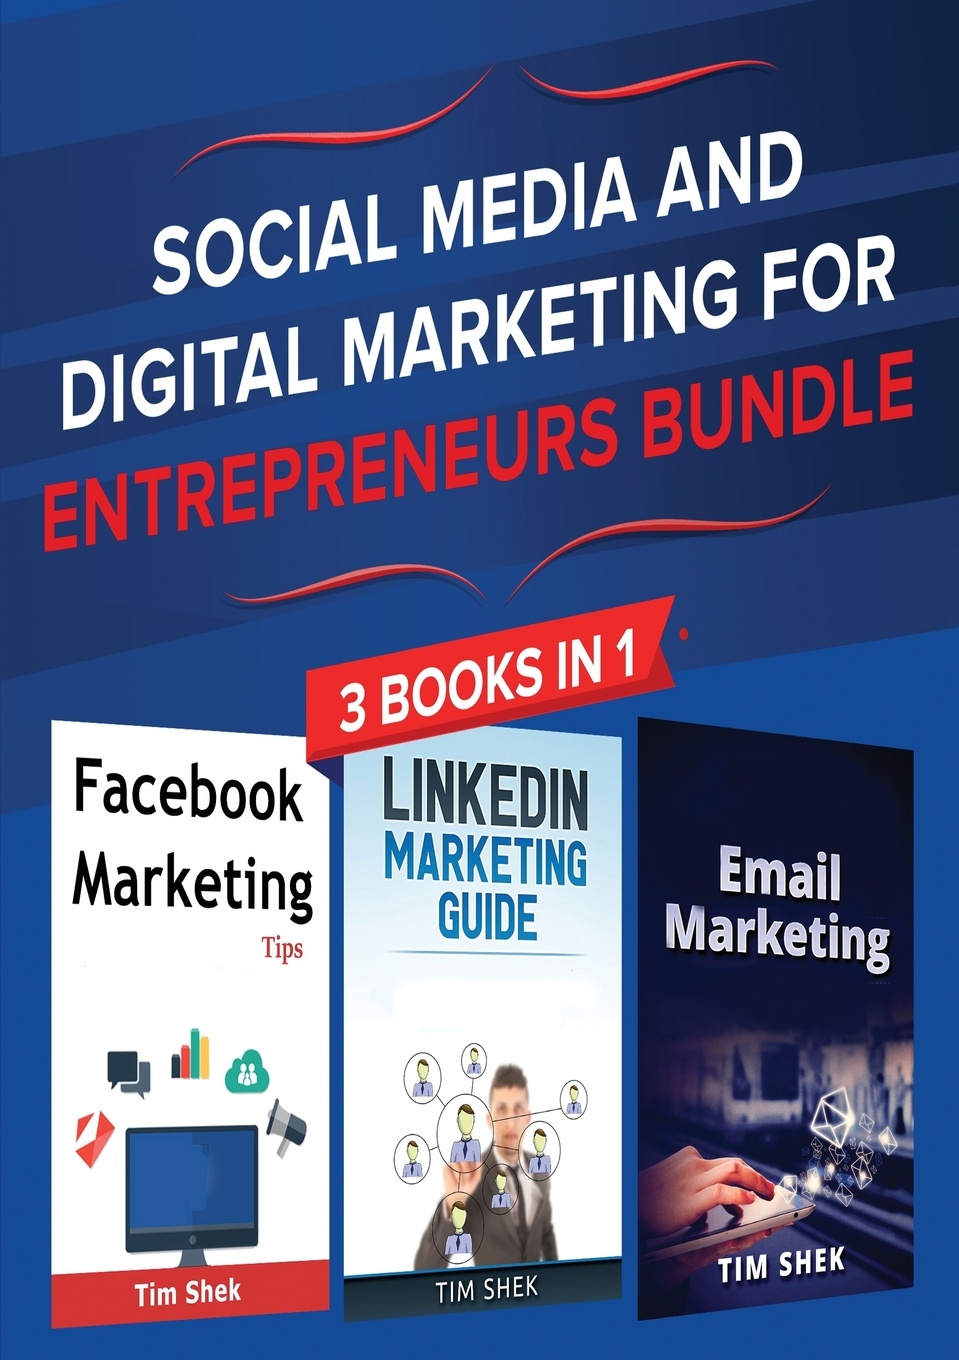 Social Media and Digital Marketing for Entrepreneurs Bundle. Cost Effective Facebook, LinkedIn, Instagram Marketing Strategy to Build a Personal Brand